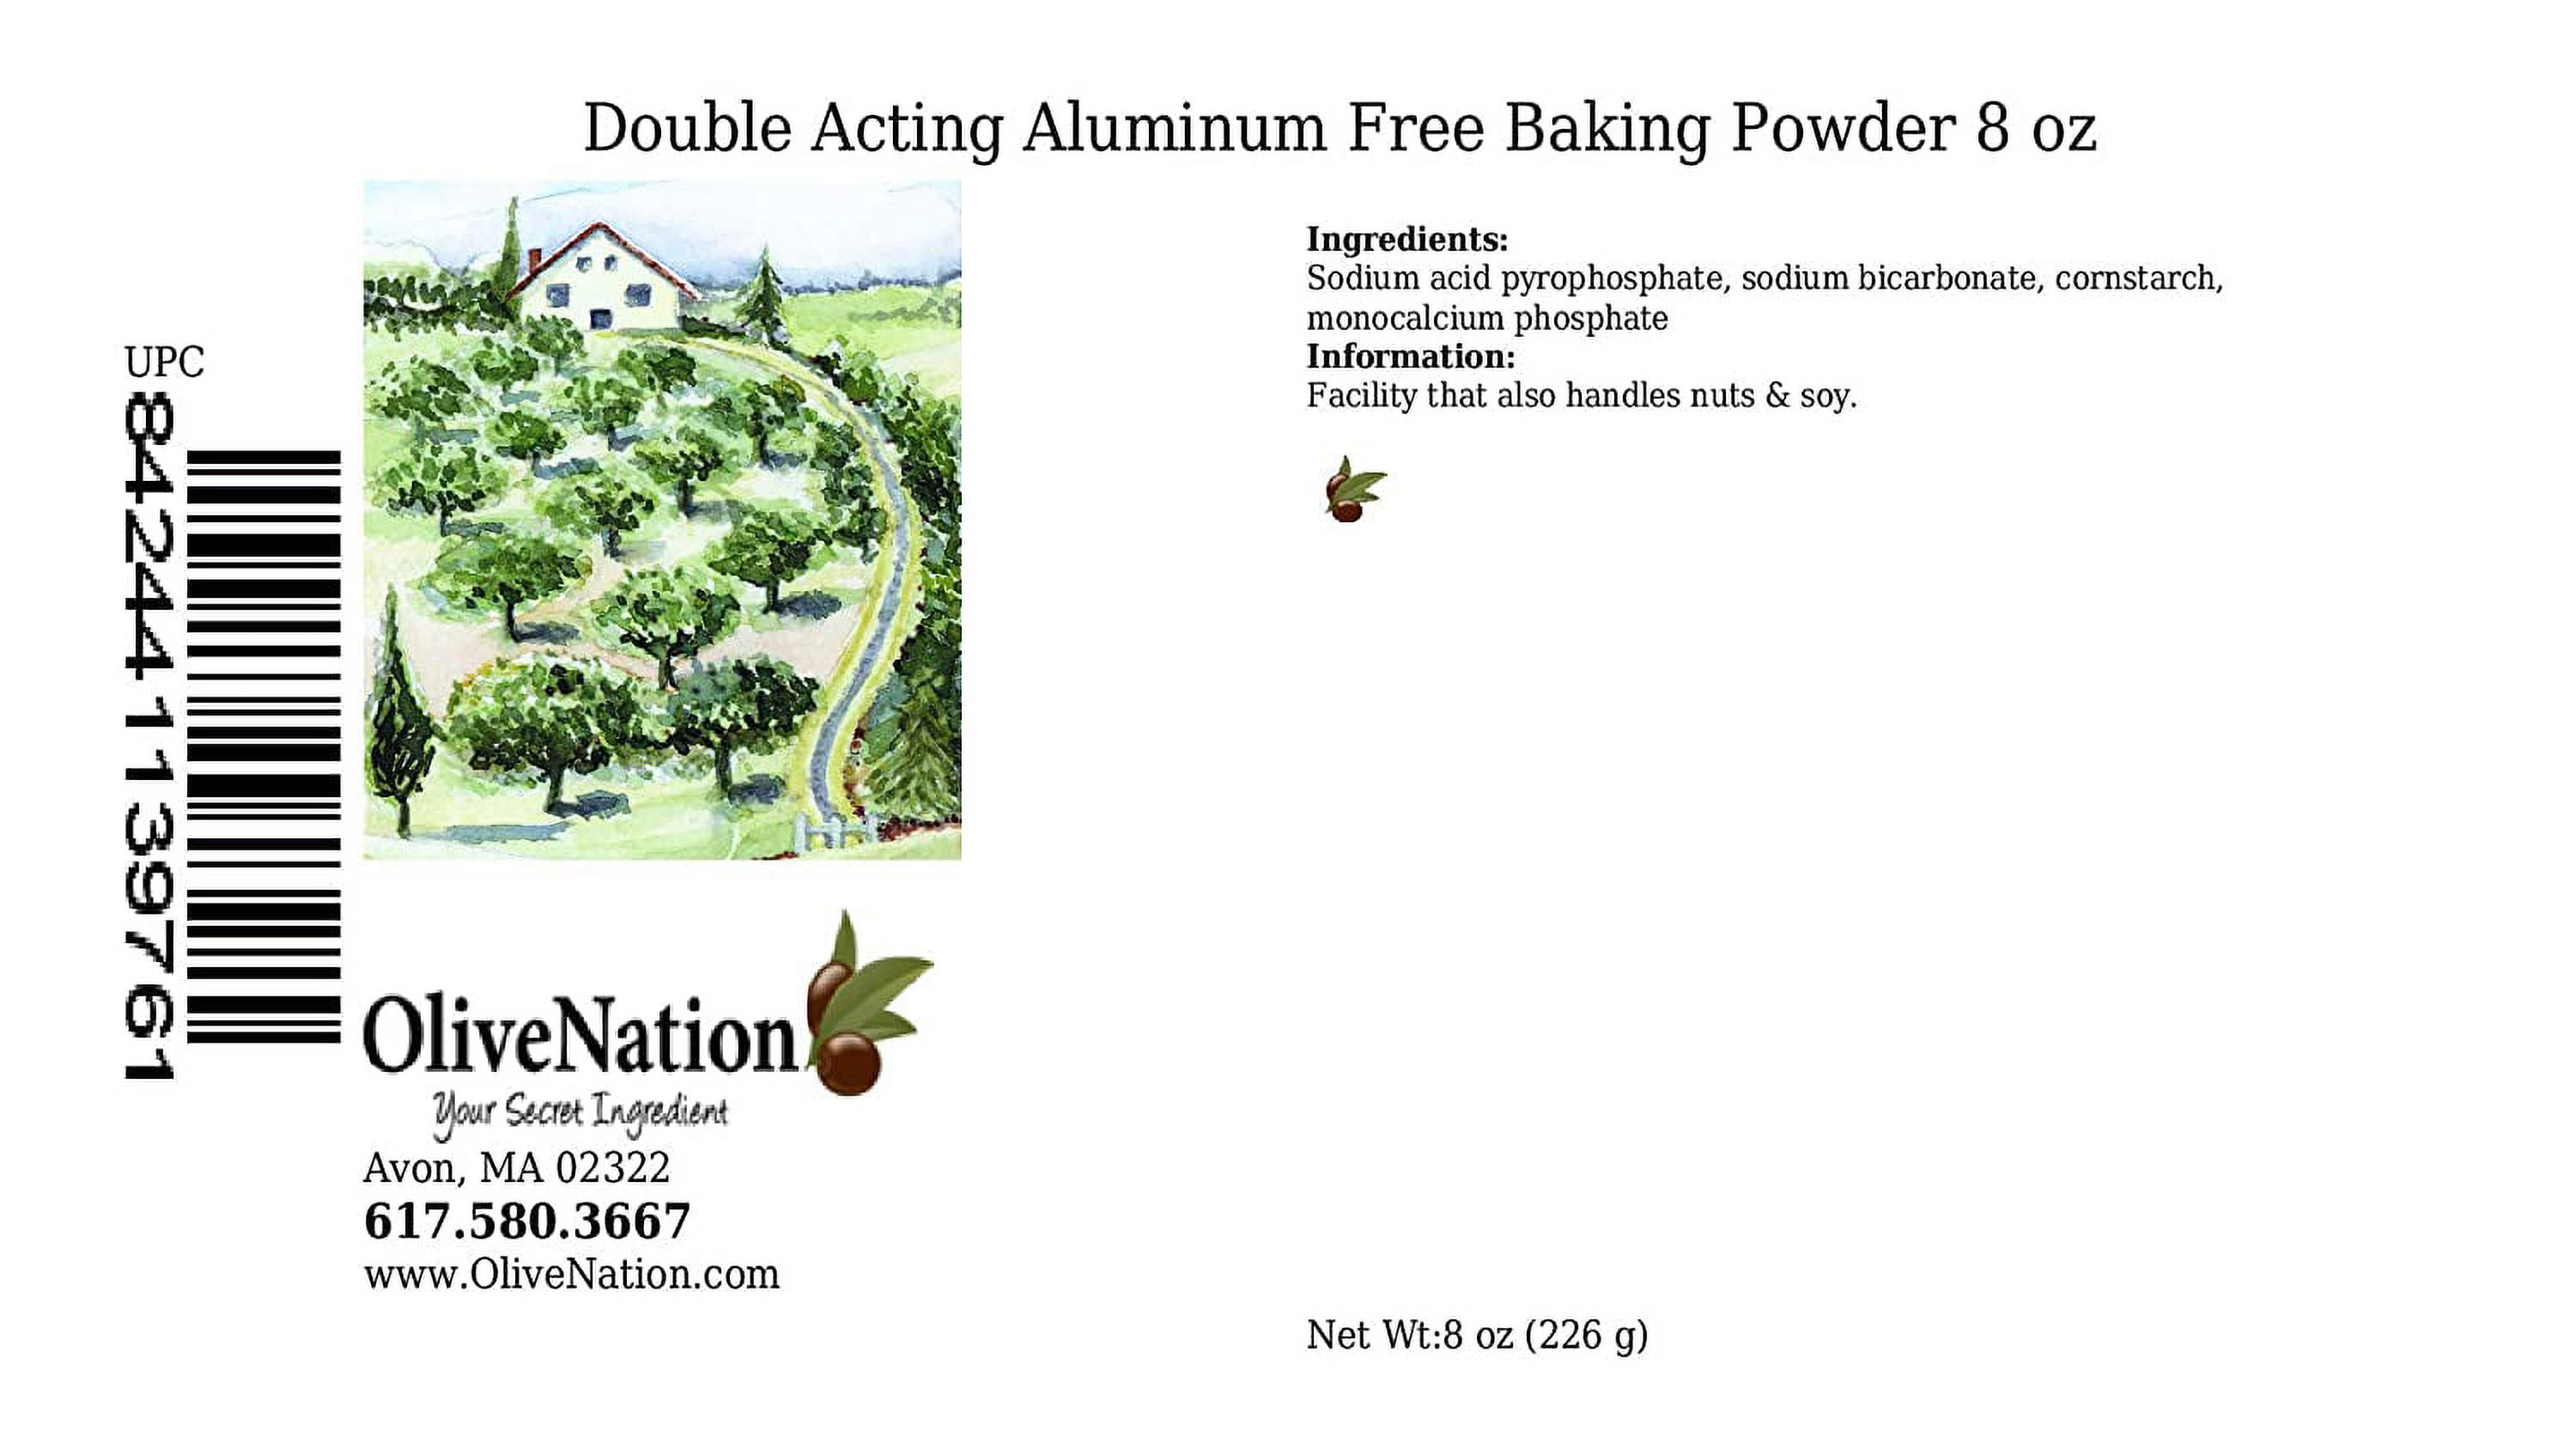 Cape Crystal Brands Sodium Alginate Powder for Chefs and Cooks, 8-oz